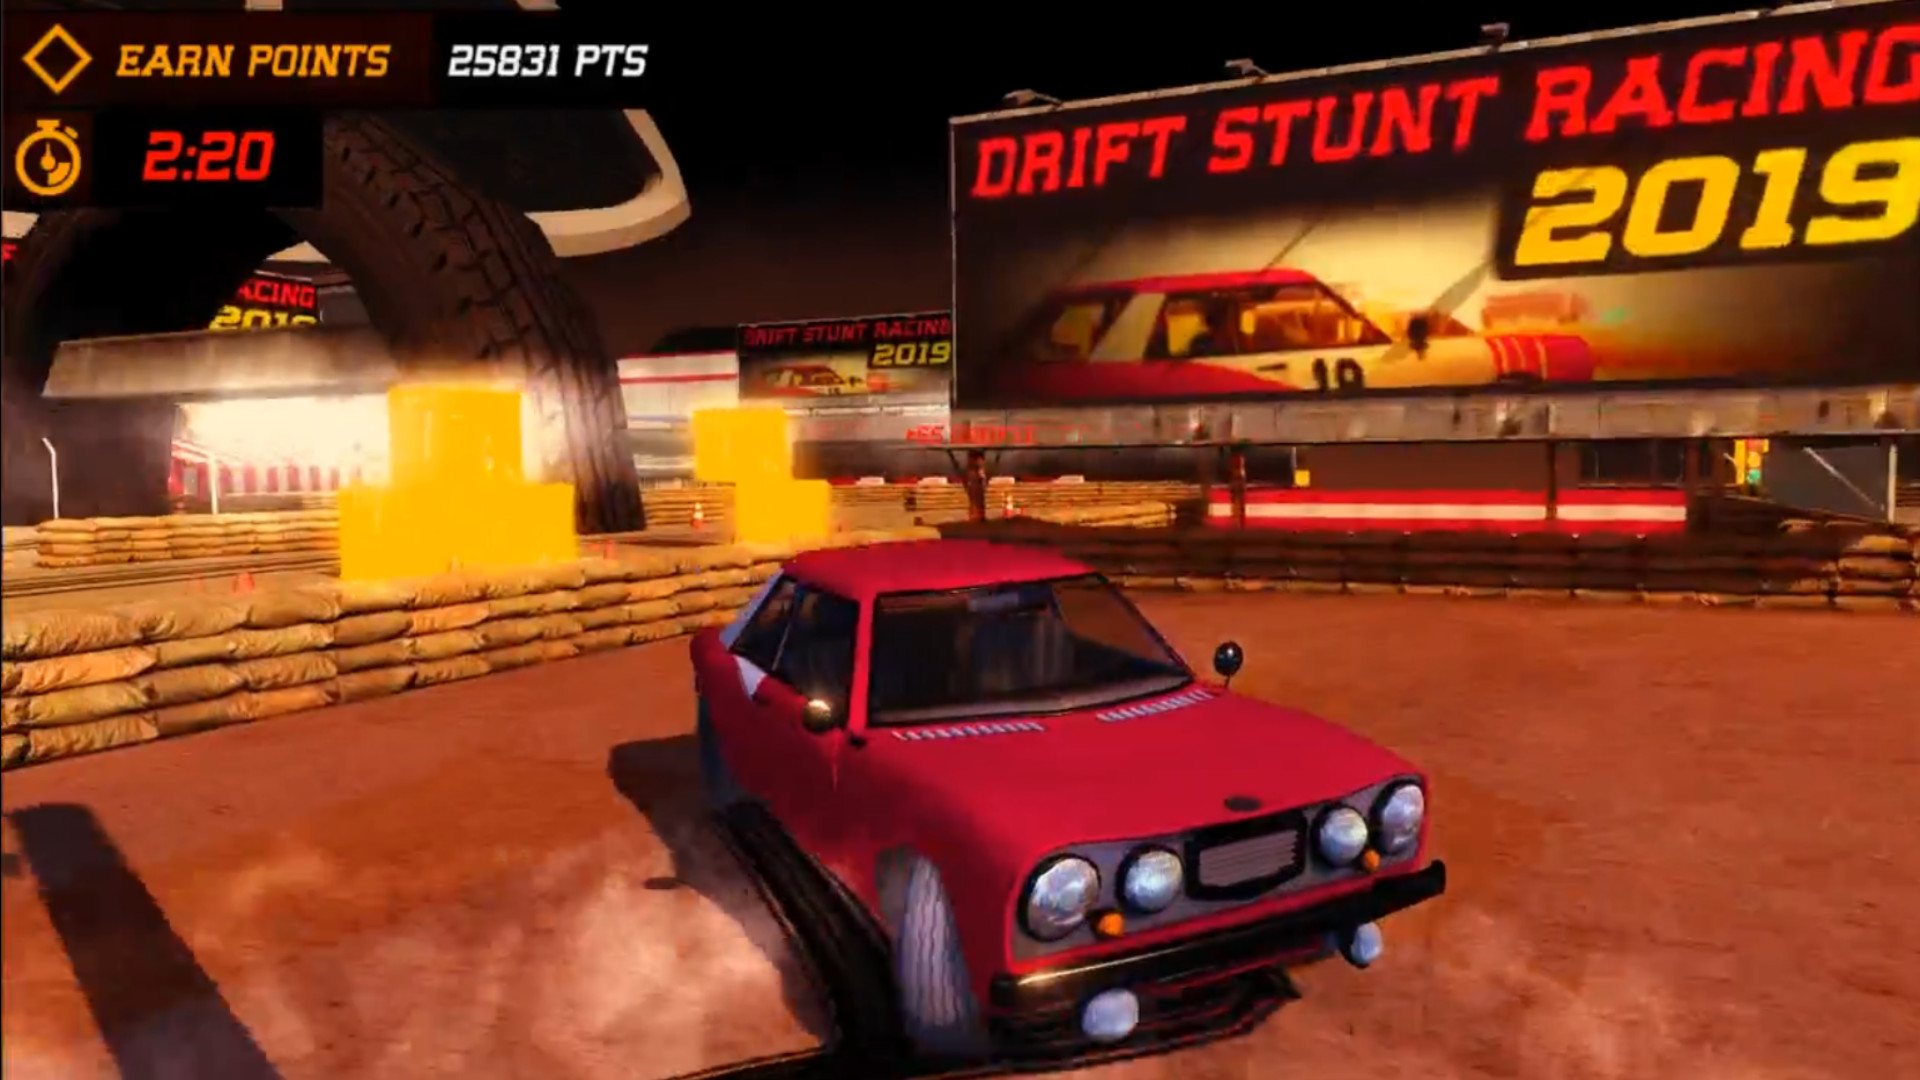 Drift Stunt Racing 2019 Steam CD Key